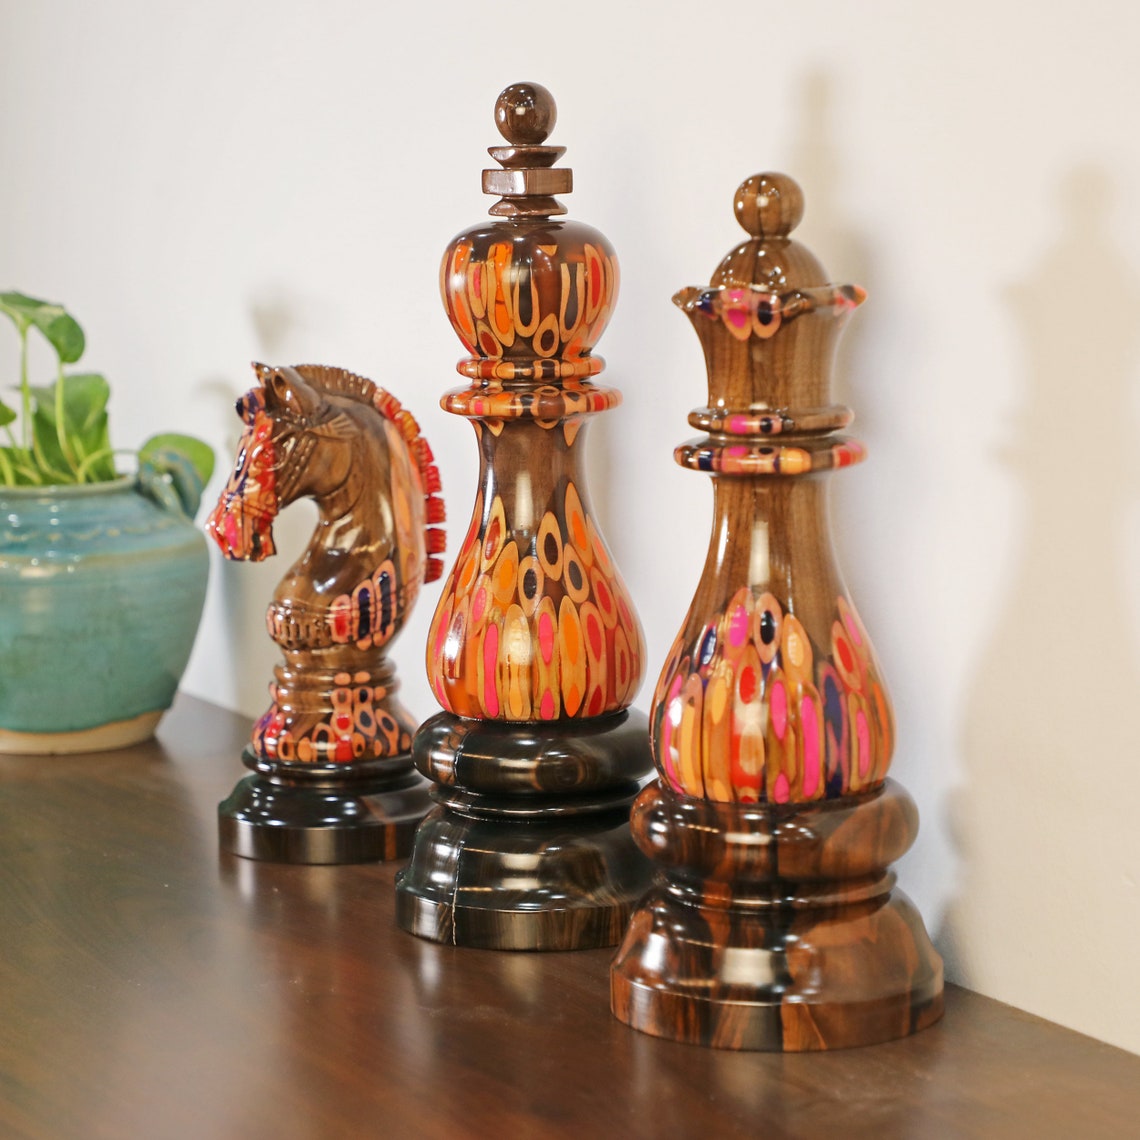 Large Ornamental Chess Pieces decor